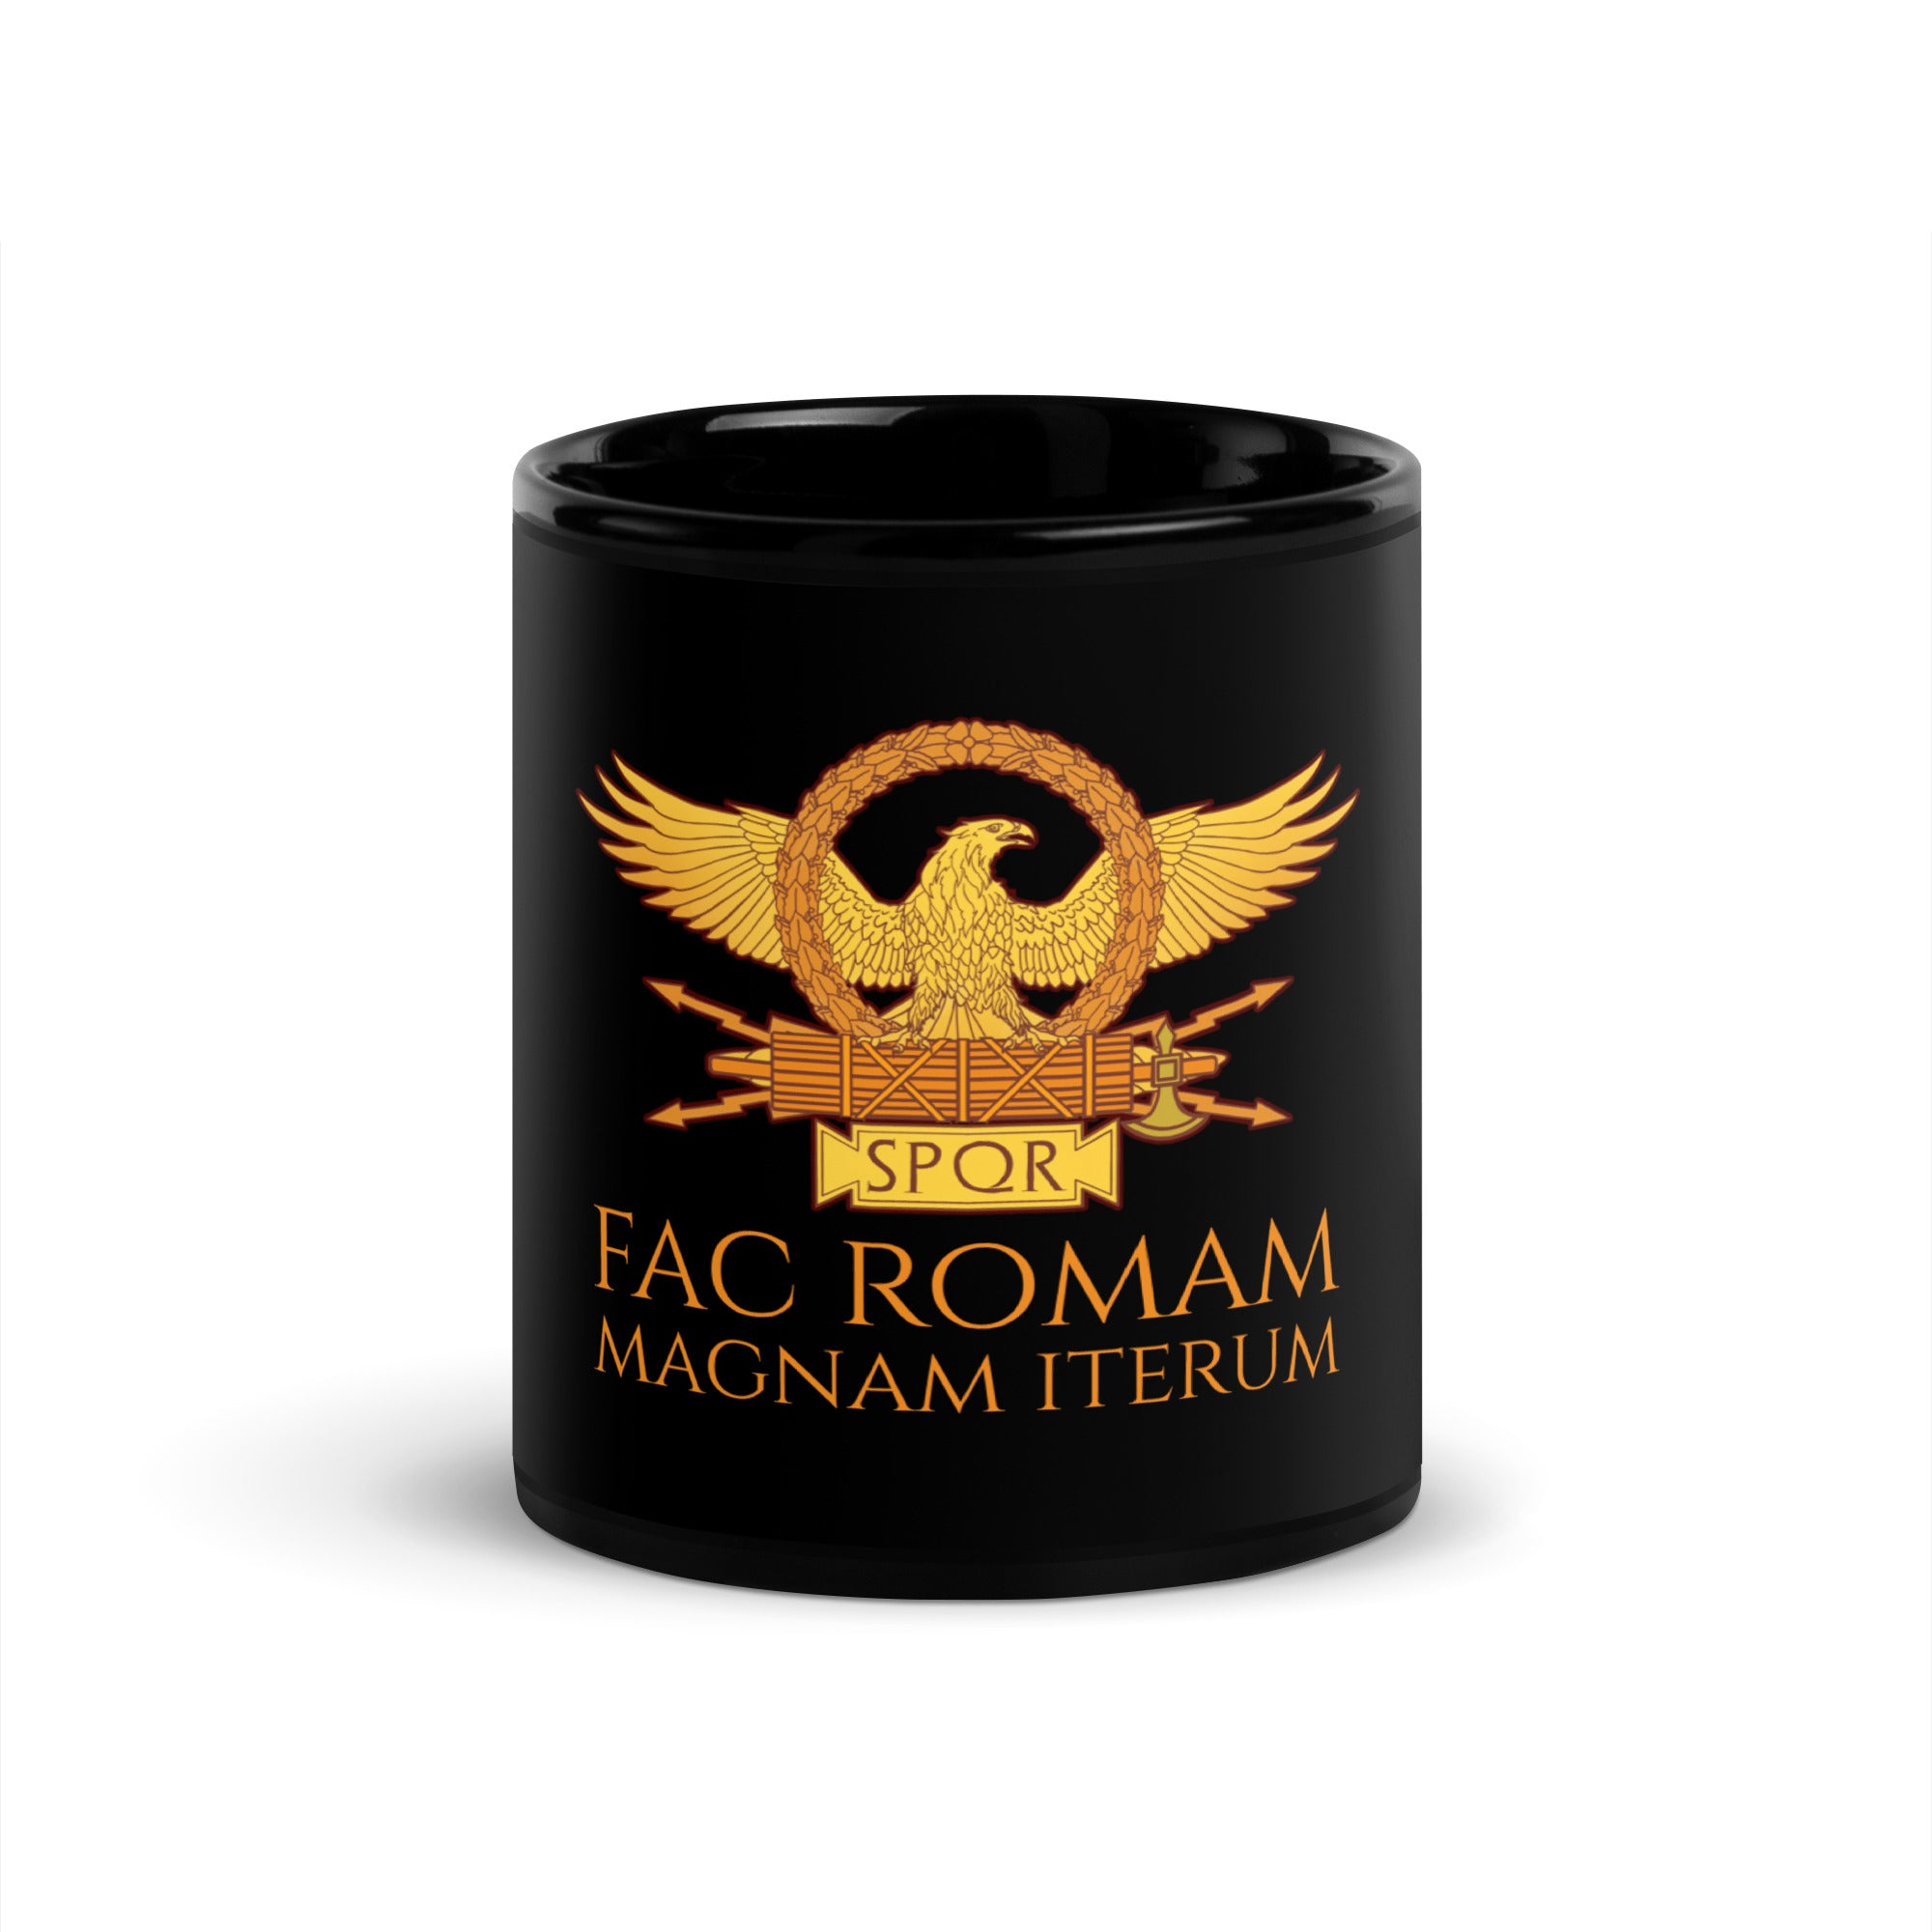 Fac Romam Magnam Iterum - Make Rome Great Again - Classical Latin - Black Glossy Mug